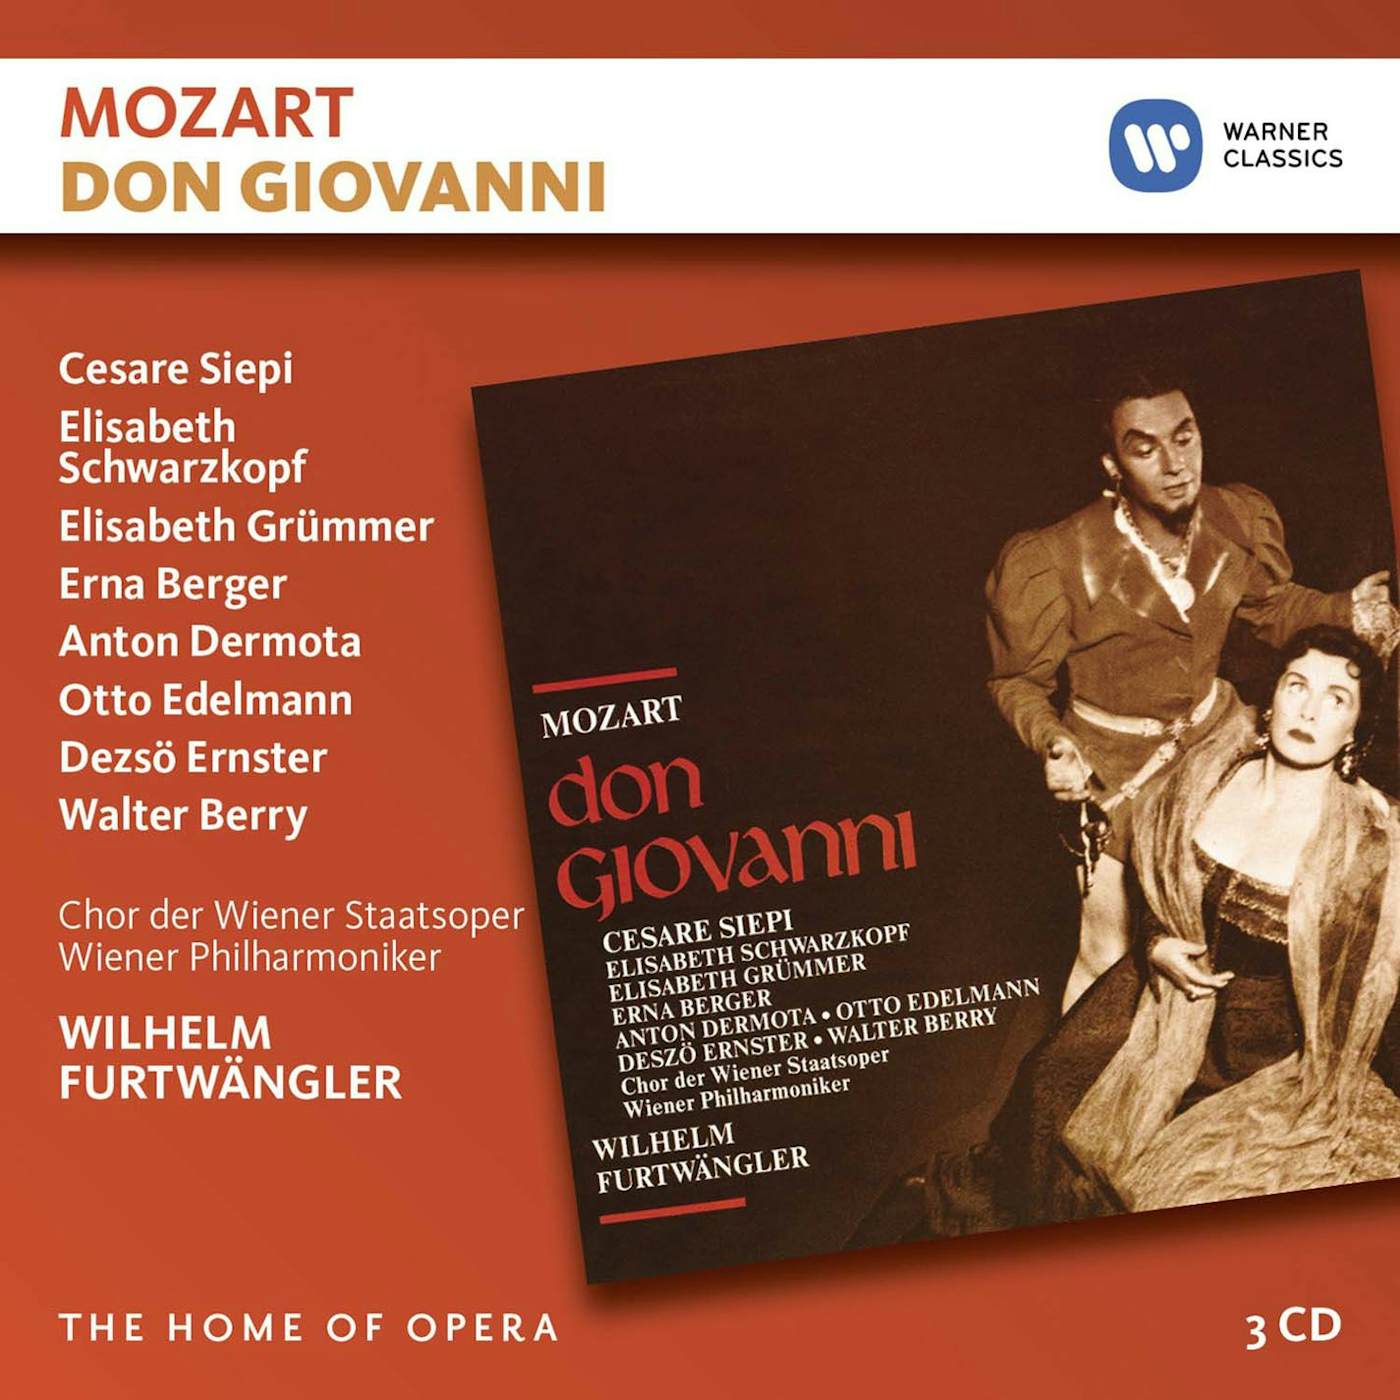 Wilhelm Furtwängler MOZART: DON GIOVANNI (LIVE AT SALZBURG 1954) CD